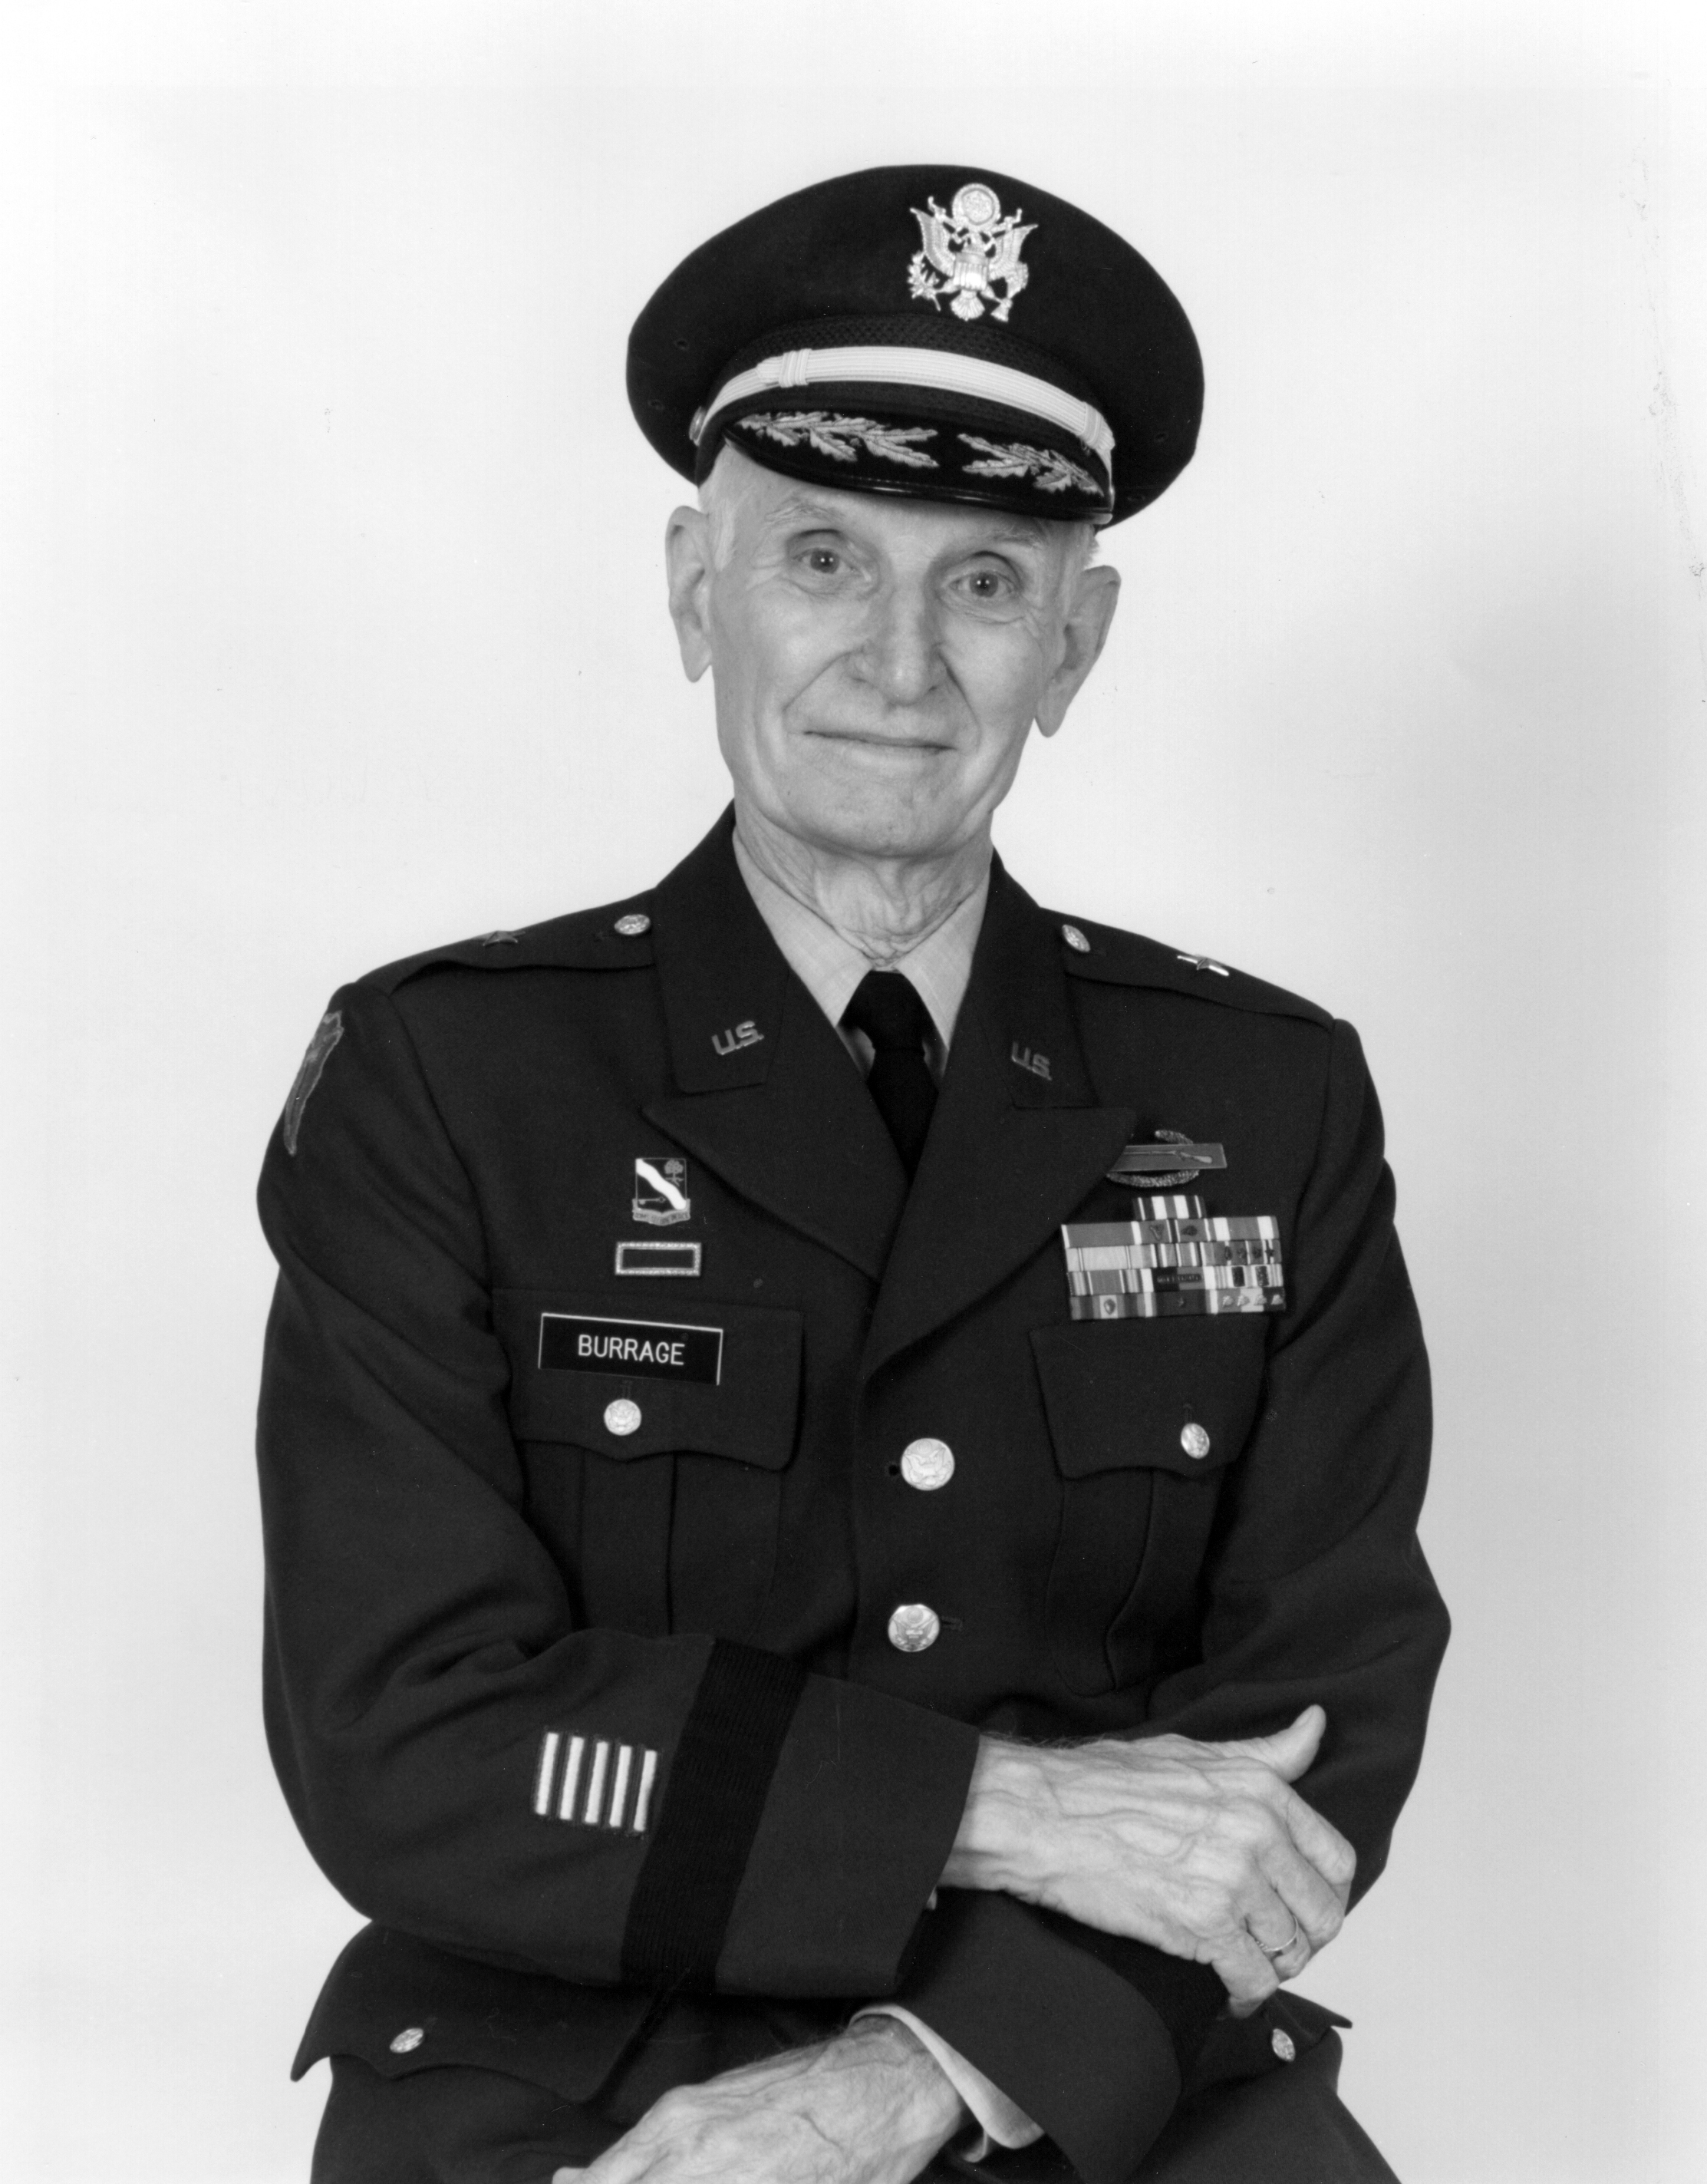 Brigadier General Richard M. Burrage